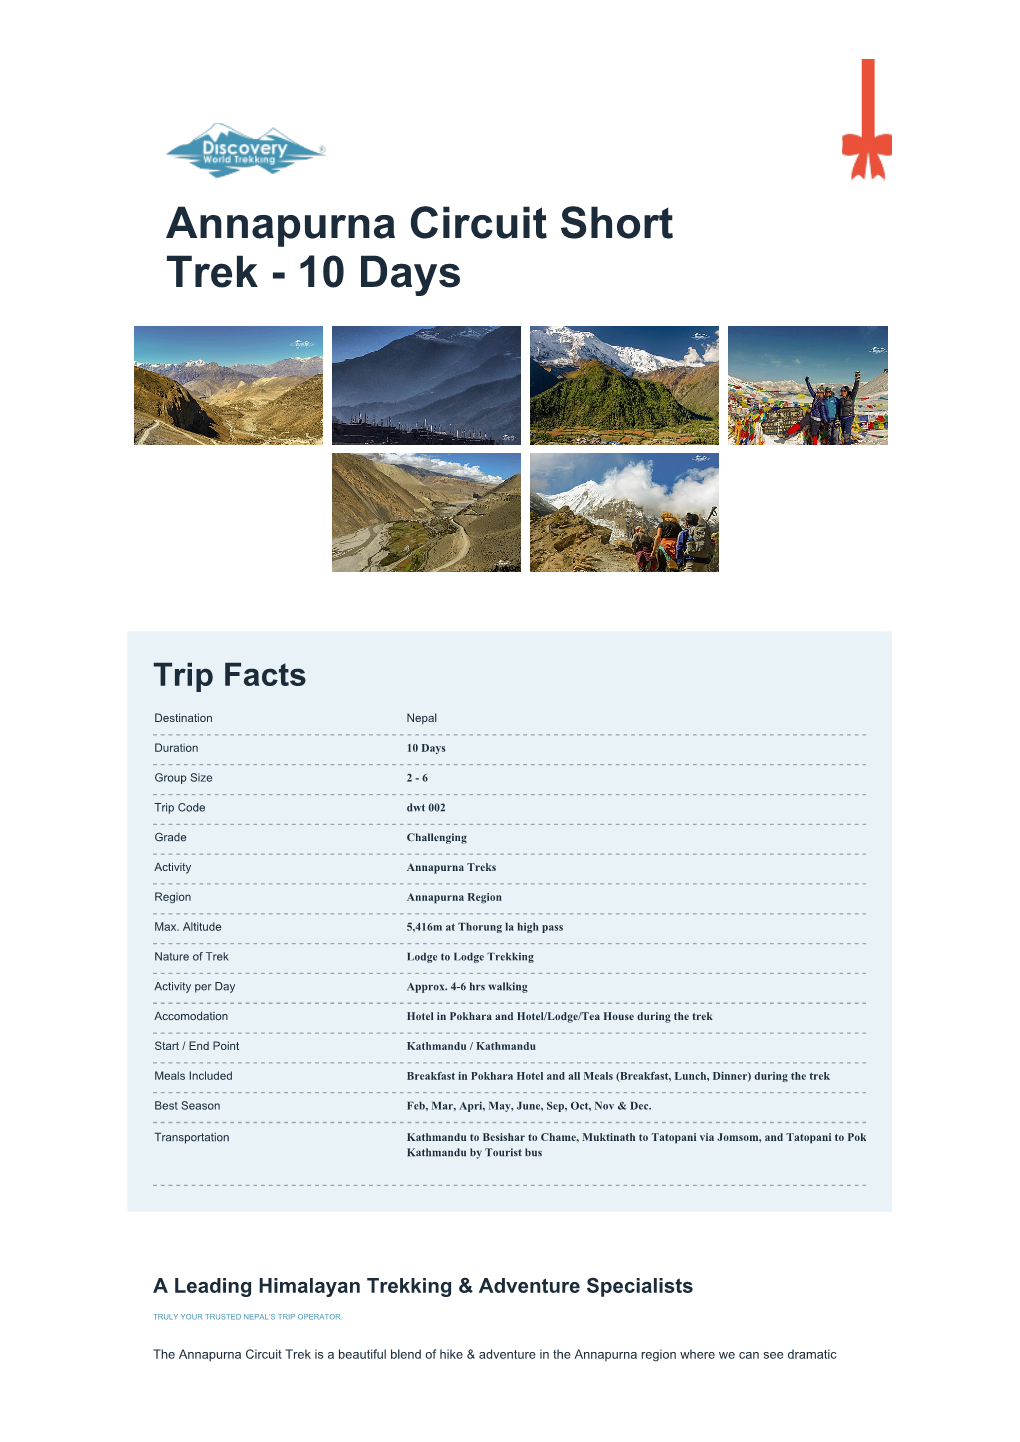 Annapurna Circuit Short Trek - 10 Days